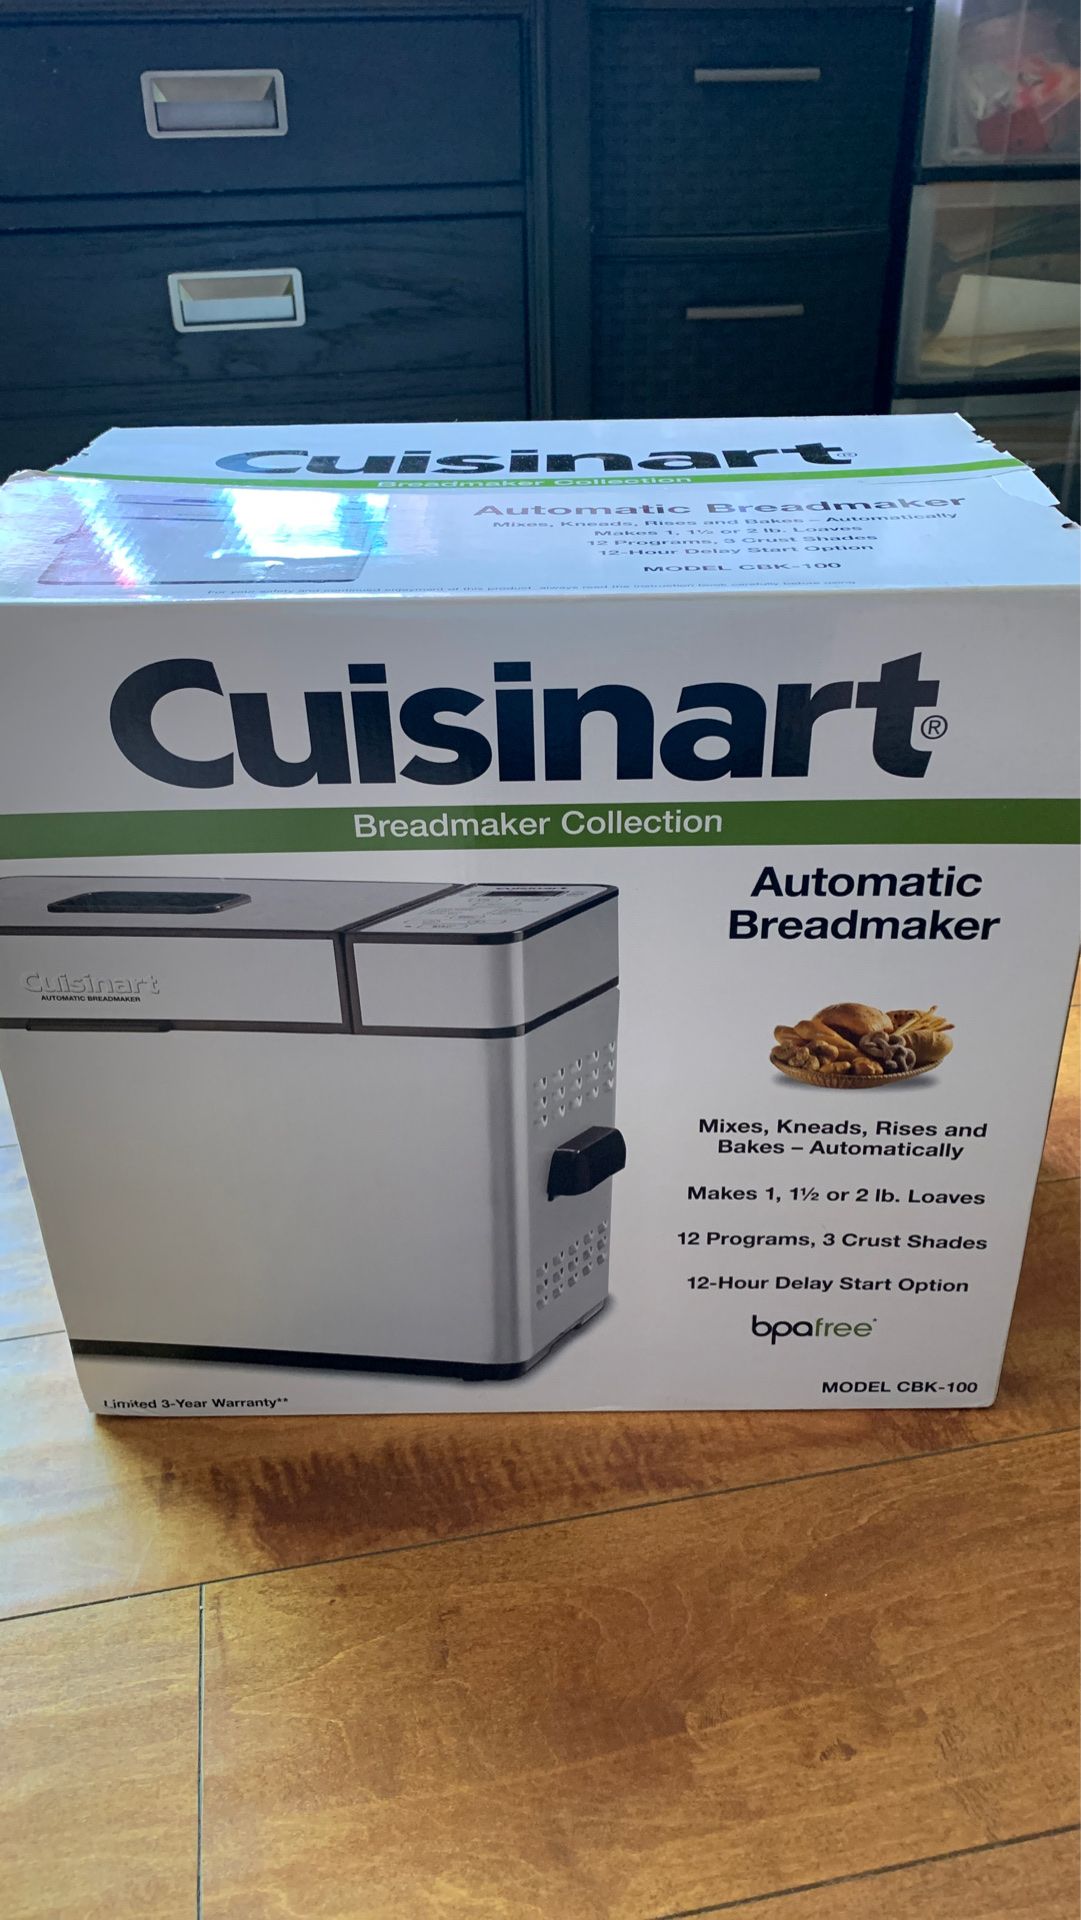 Cuisinart bread maker automatic model CBK-100